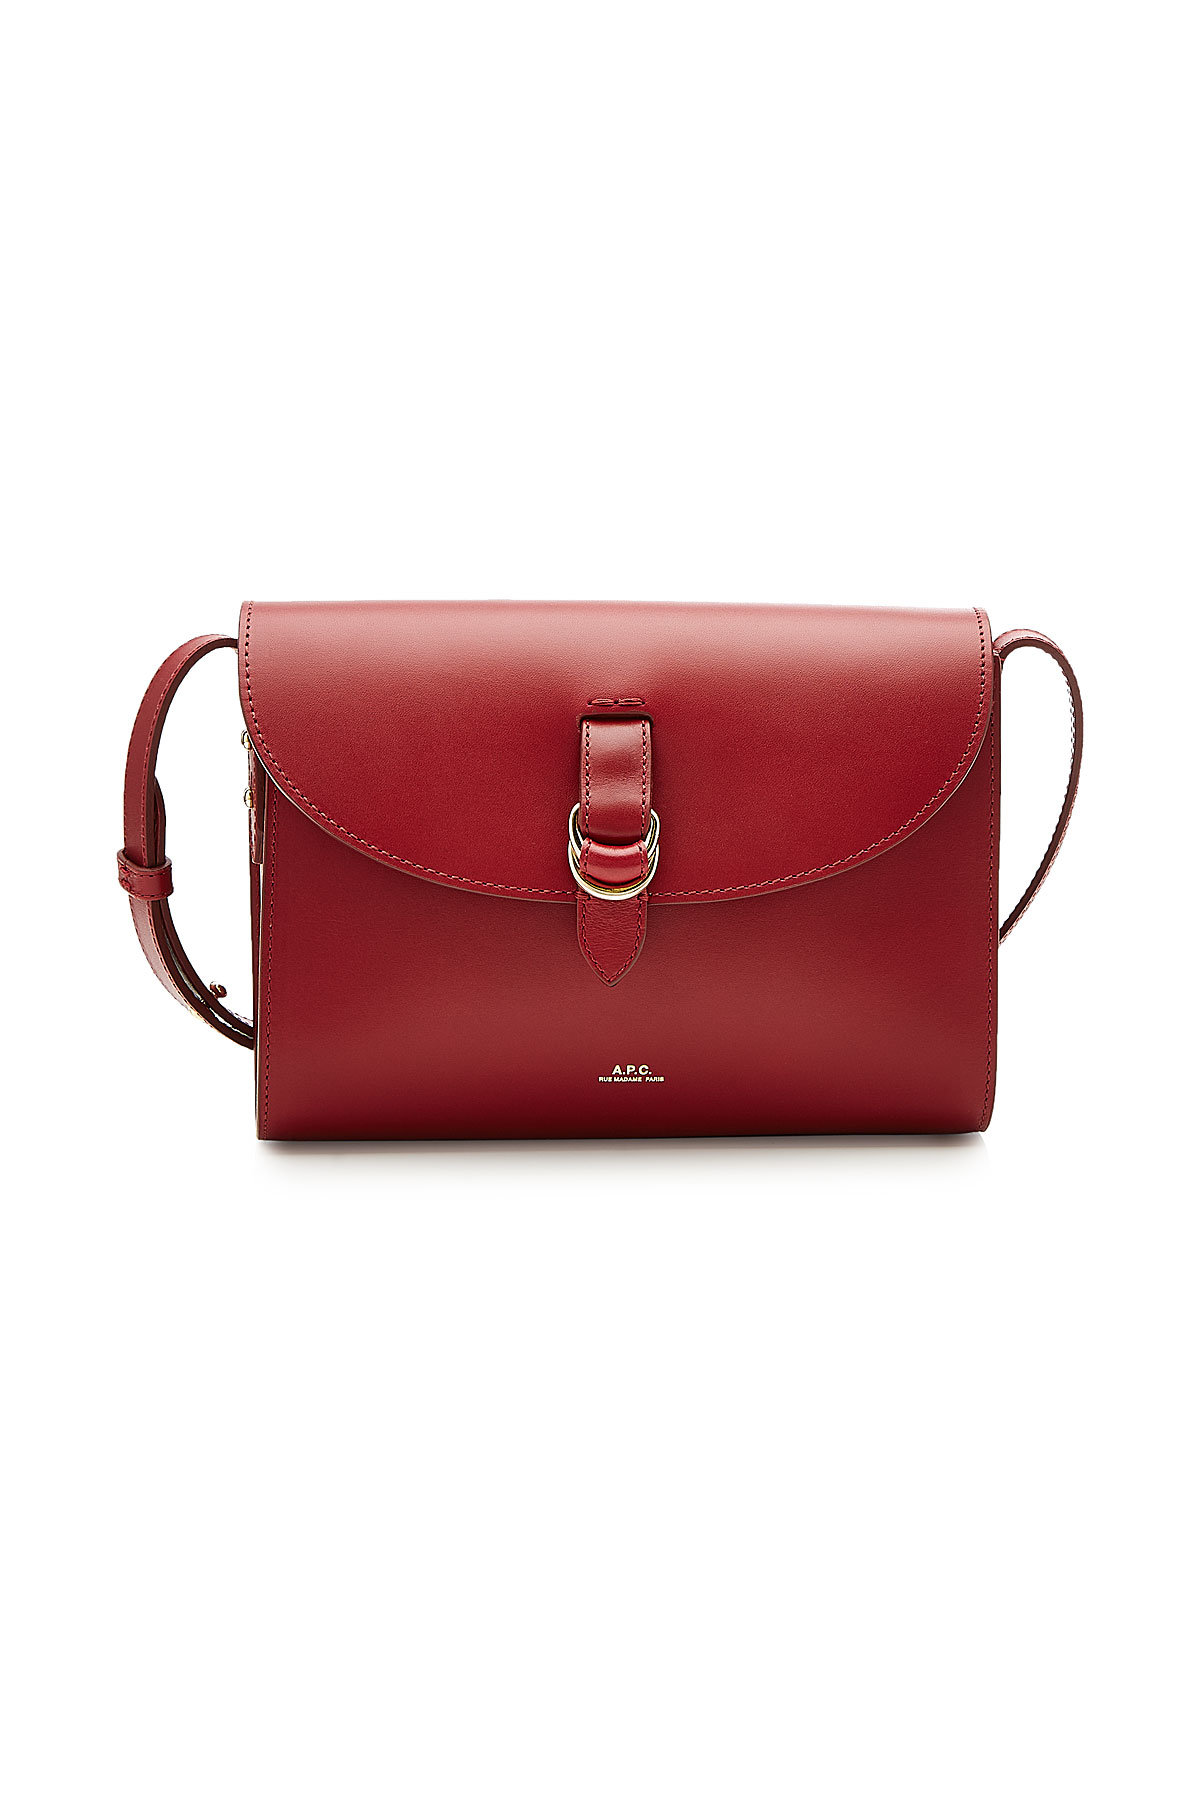 A.P.C. - Alicia Leather Shoulder Bag